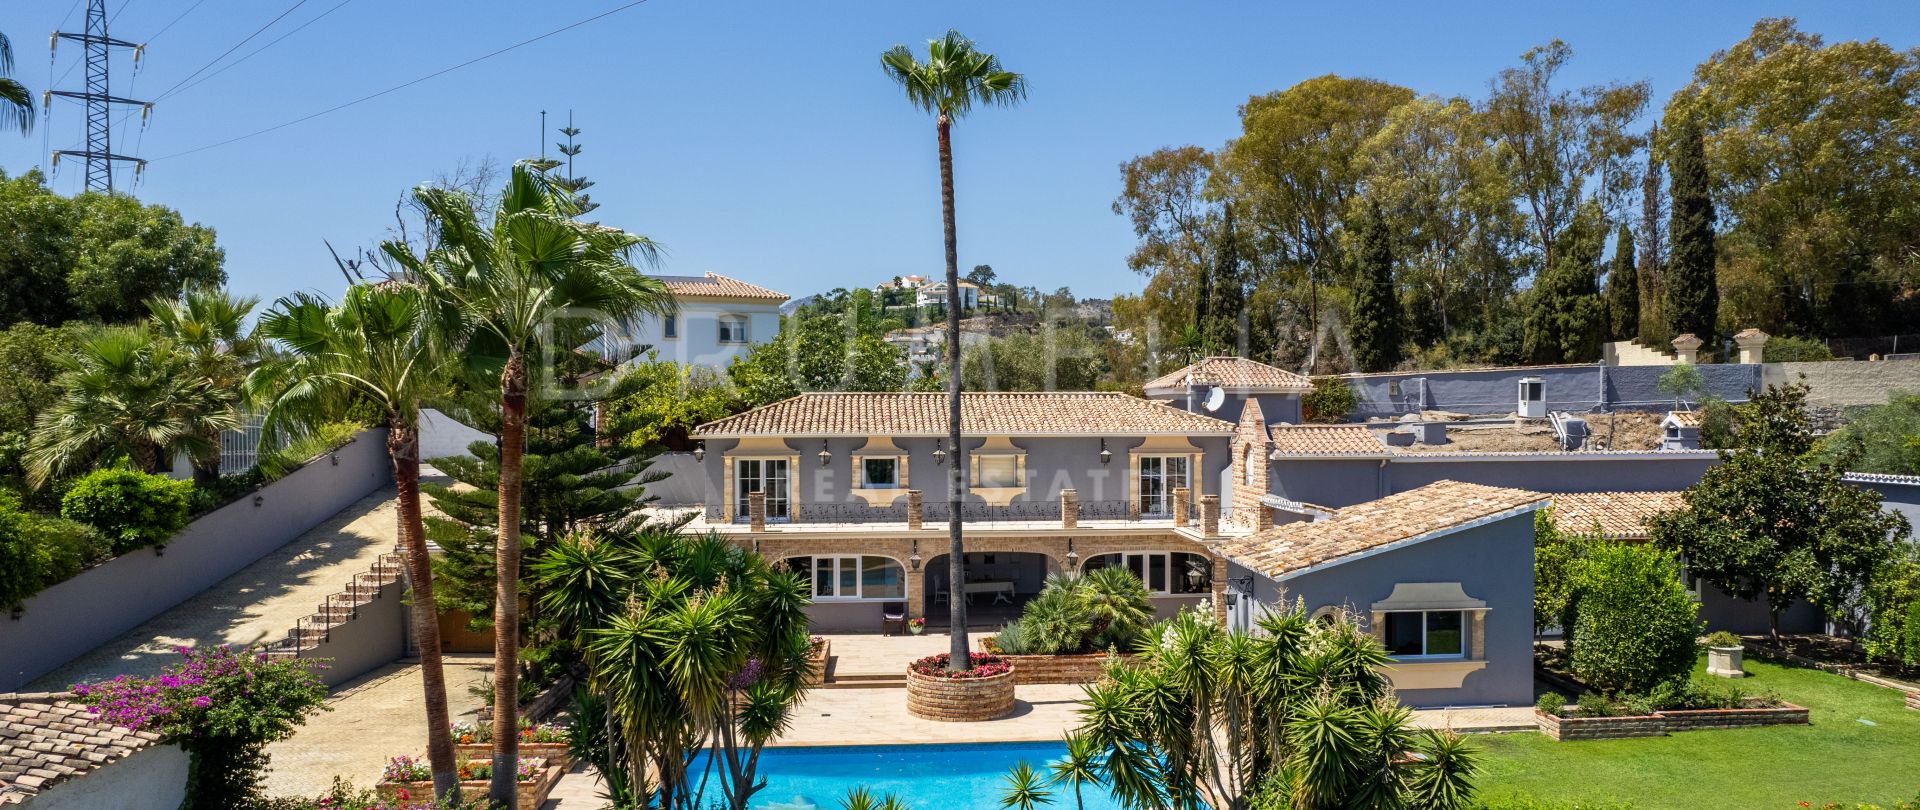 Truly exceptional luxury villa for sale in charming Fuente del Espanto, Benahavis